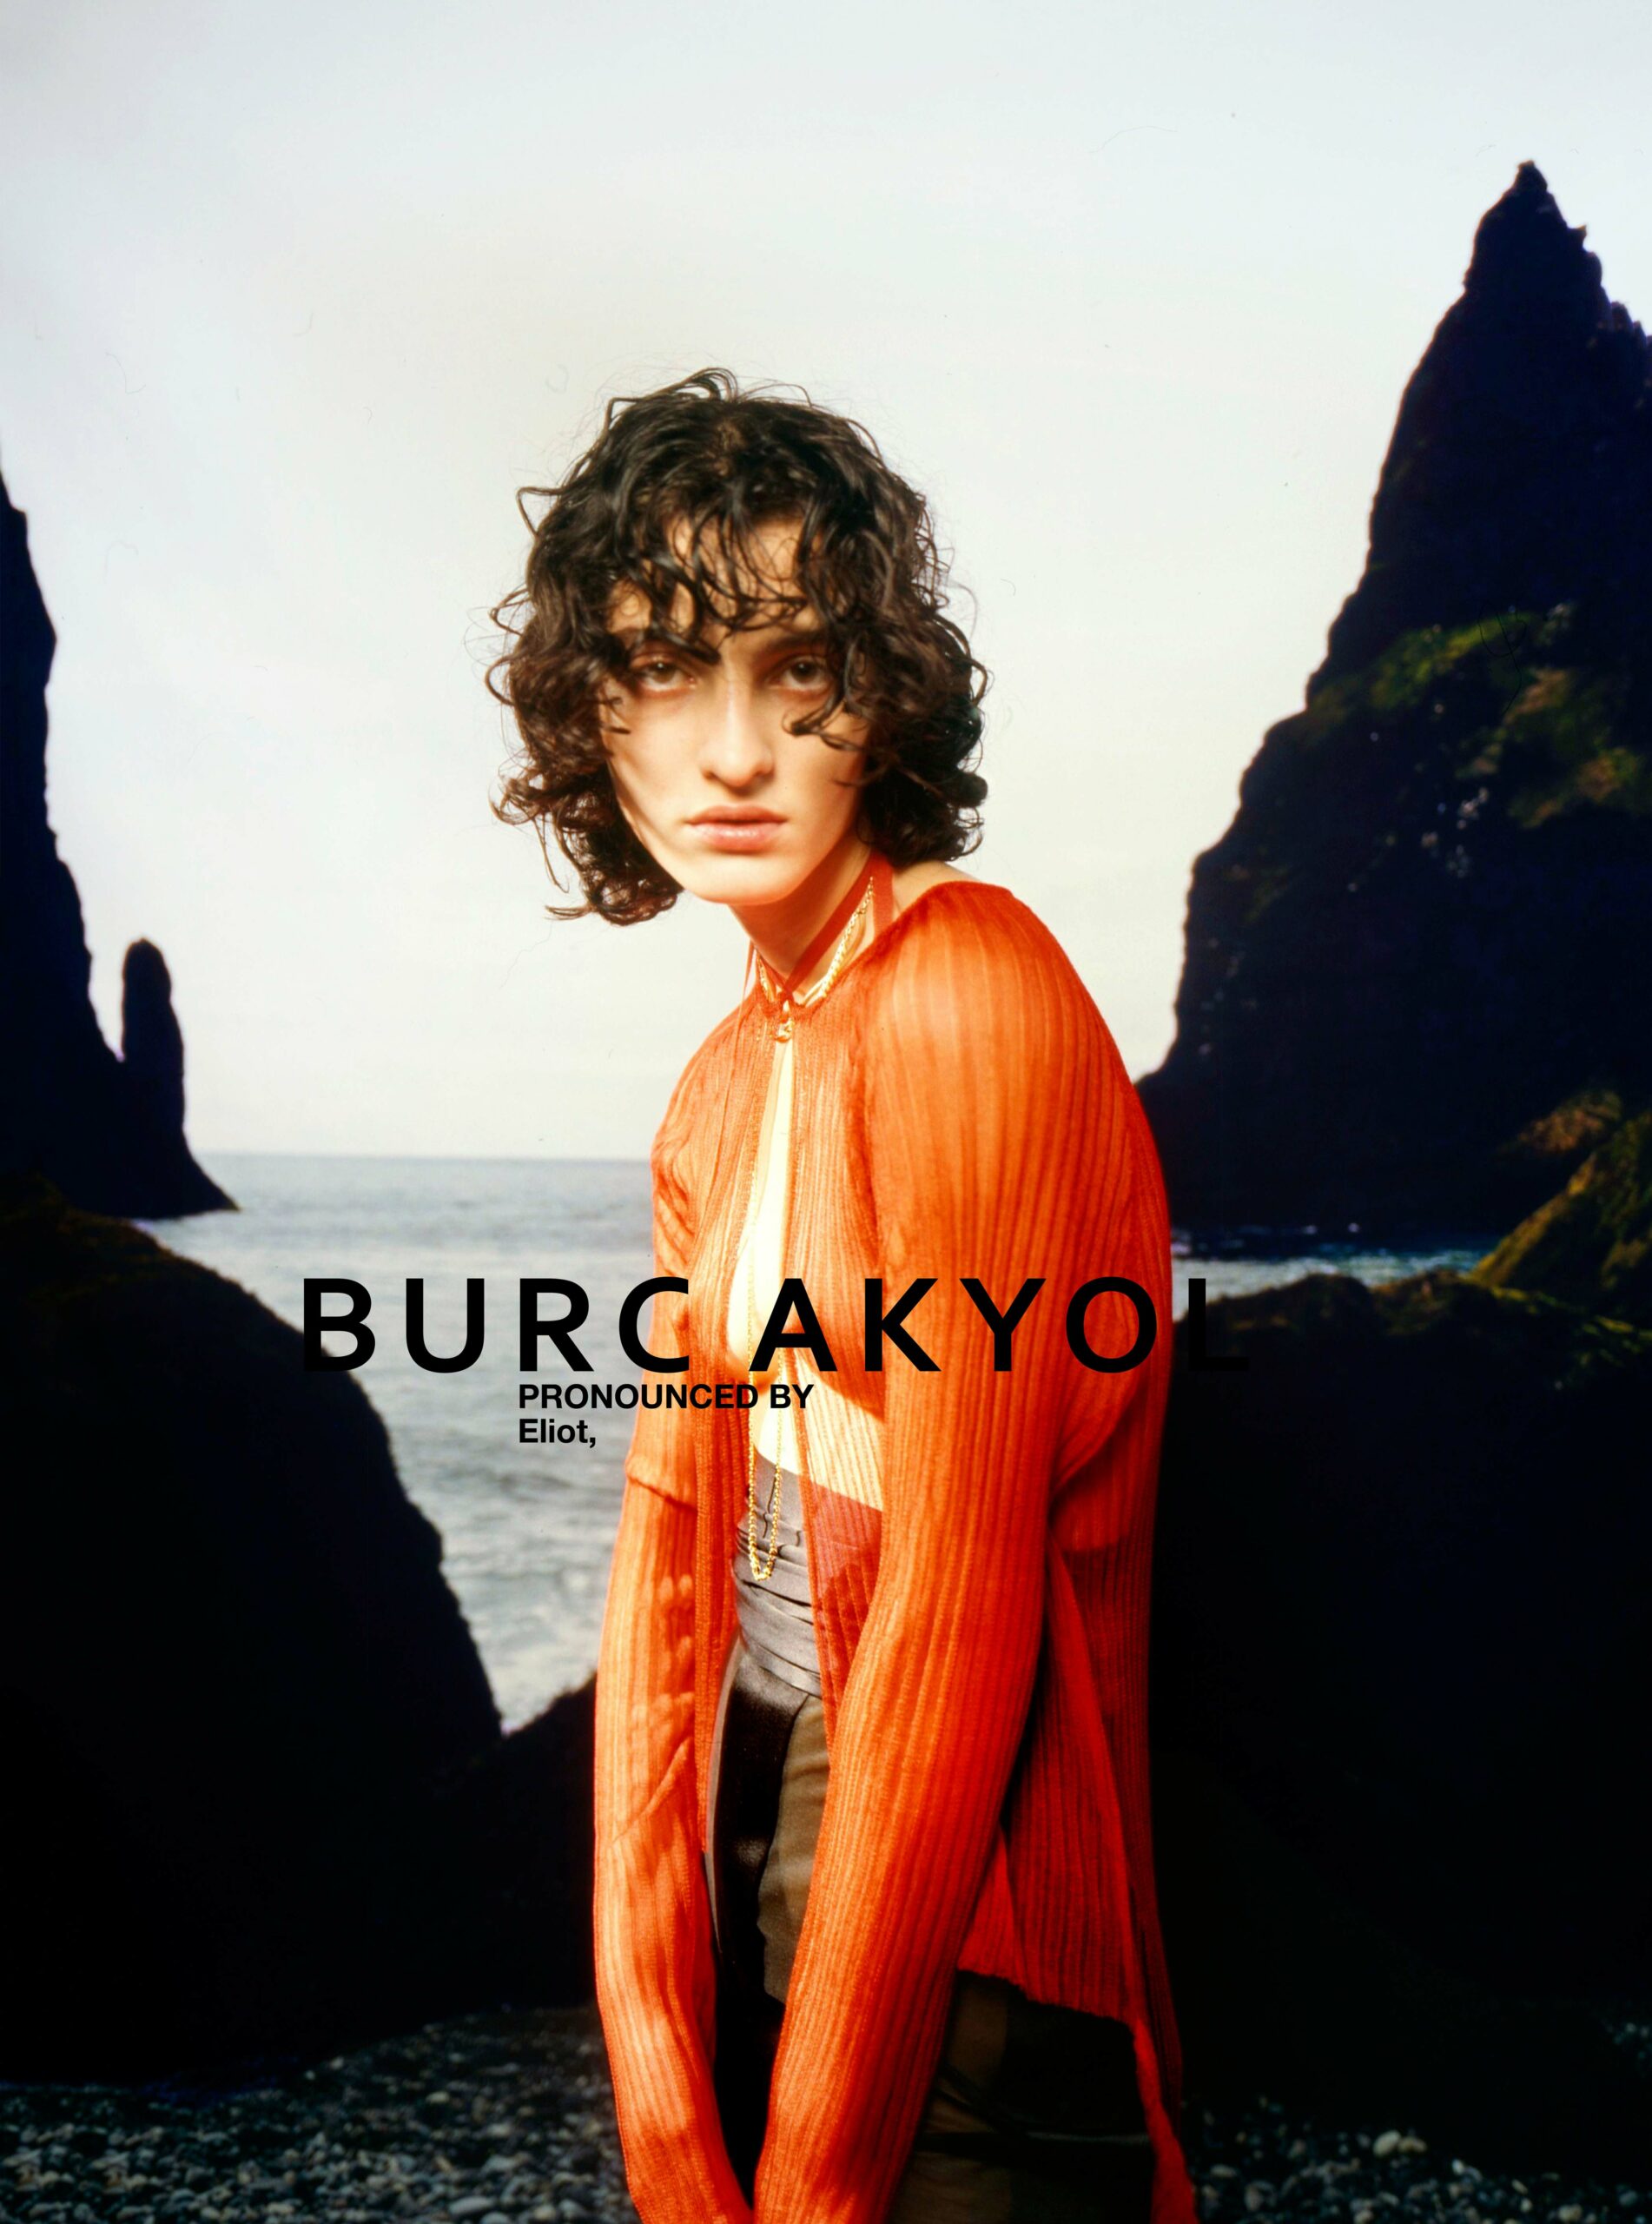 BURC AKYOL PRONOUNCED BY ELIOT, – Burc Akyol